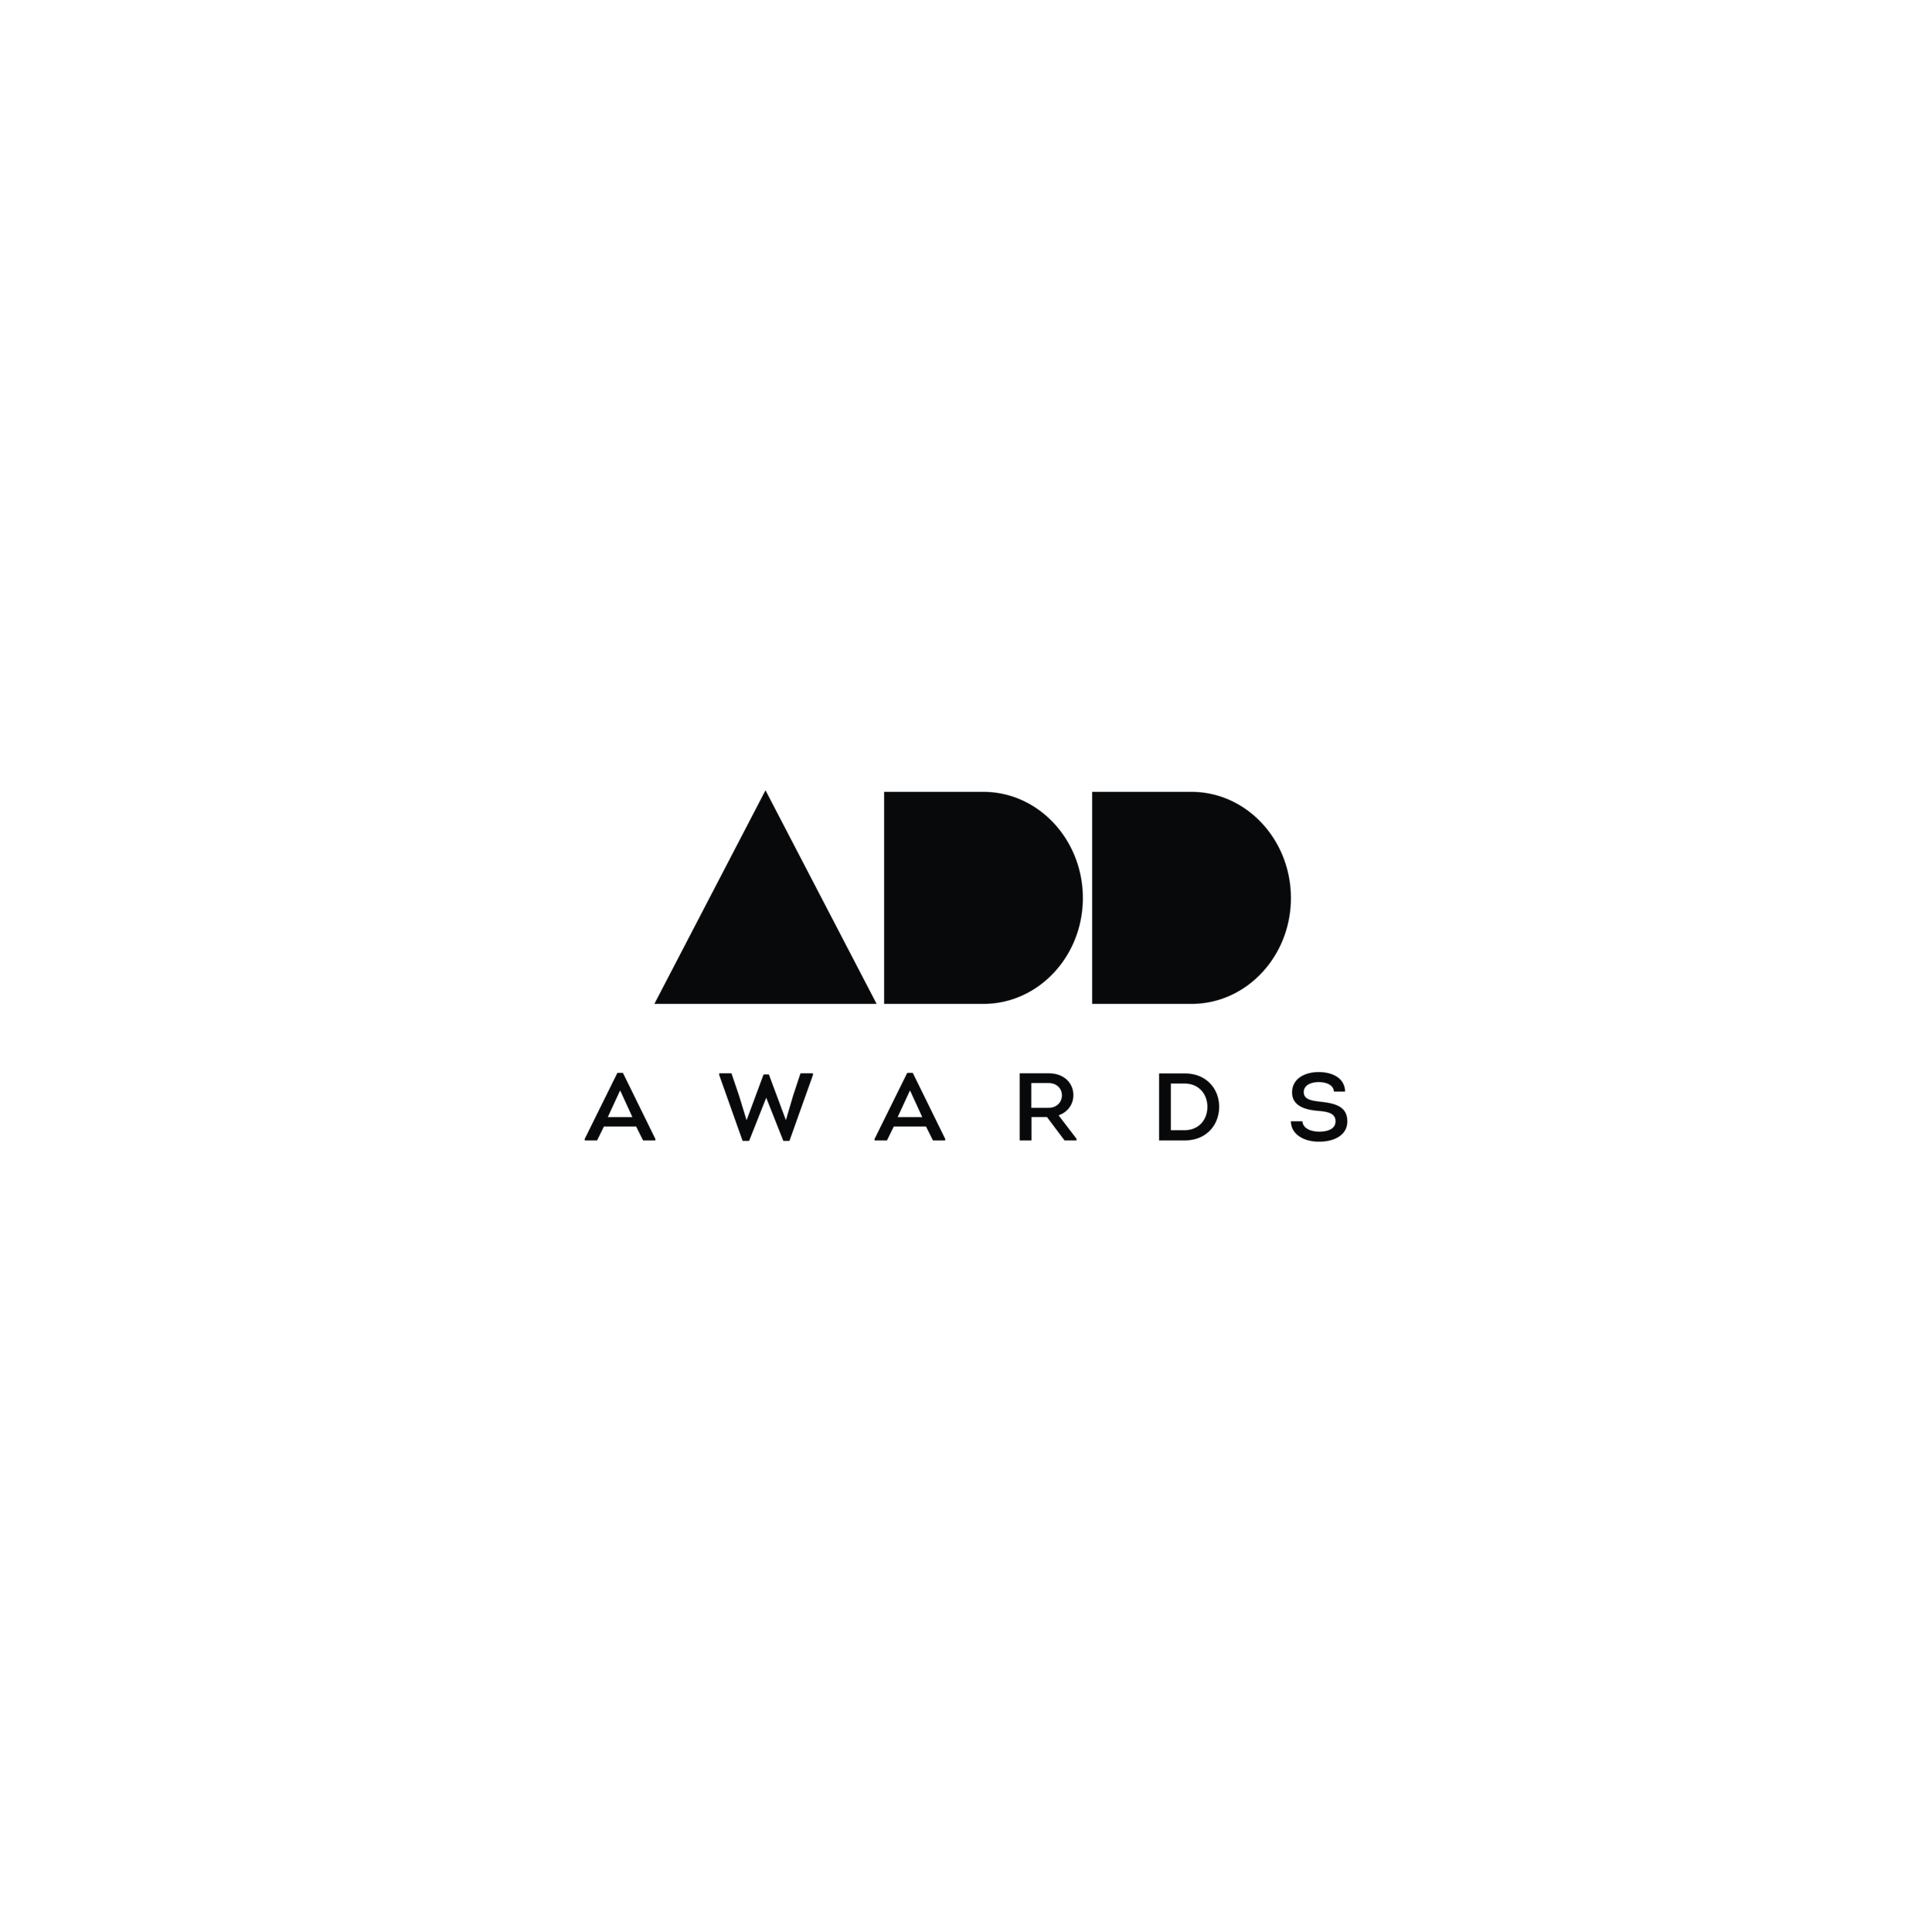 Add Awards. Add Awards логотип. Премия адд. Luxury бренд.